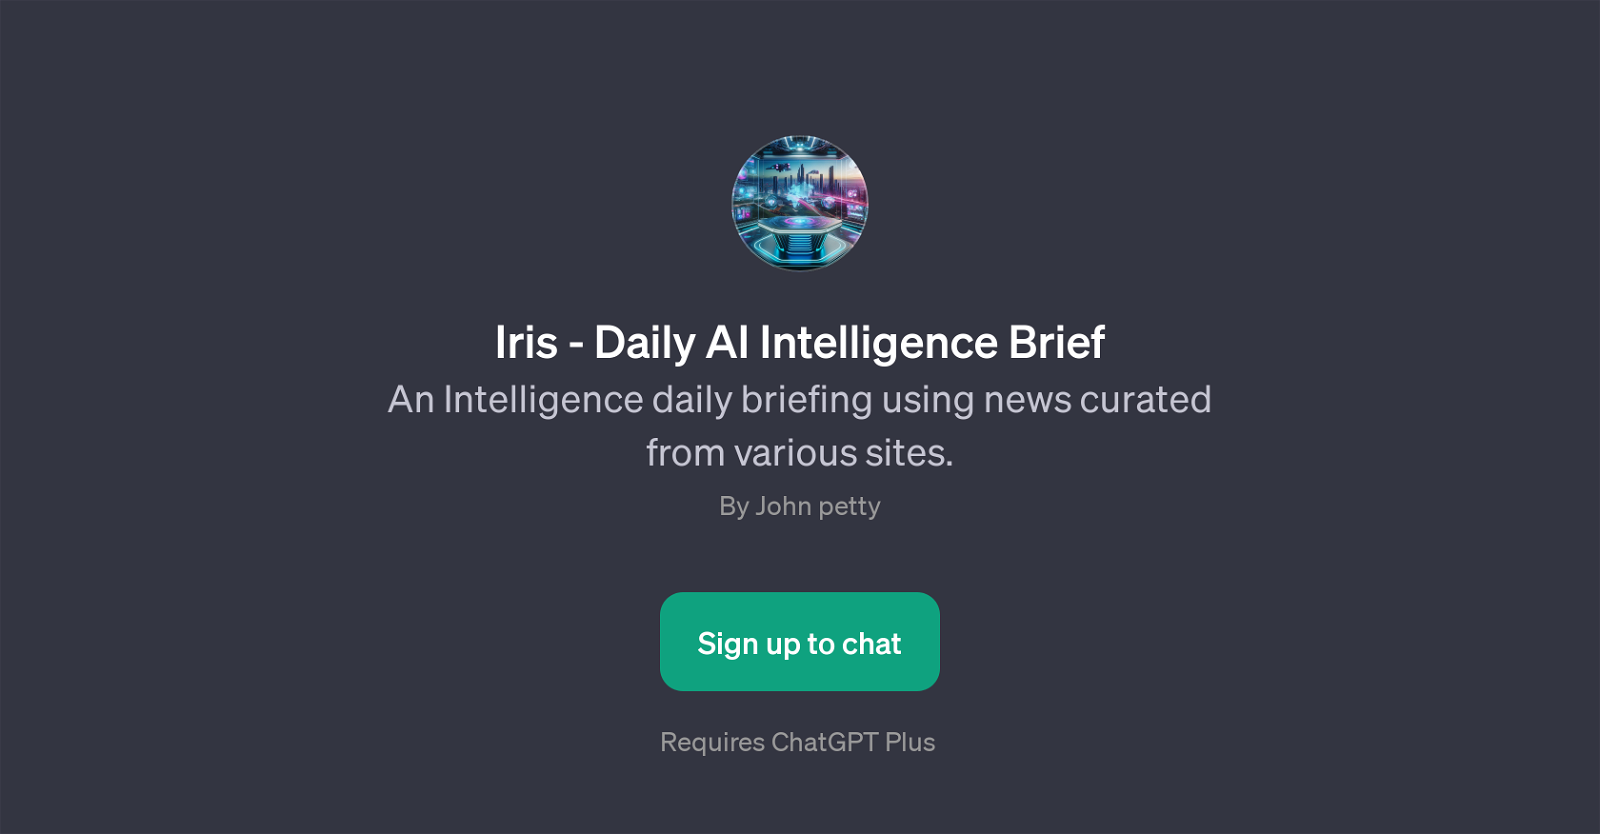 Iris - Daily AI Intelligence Brief website